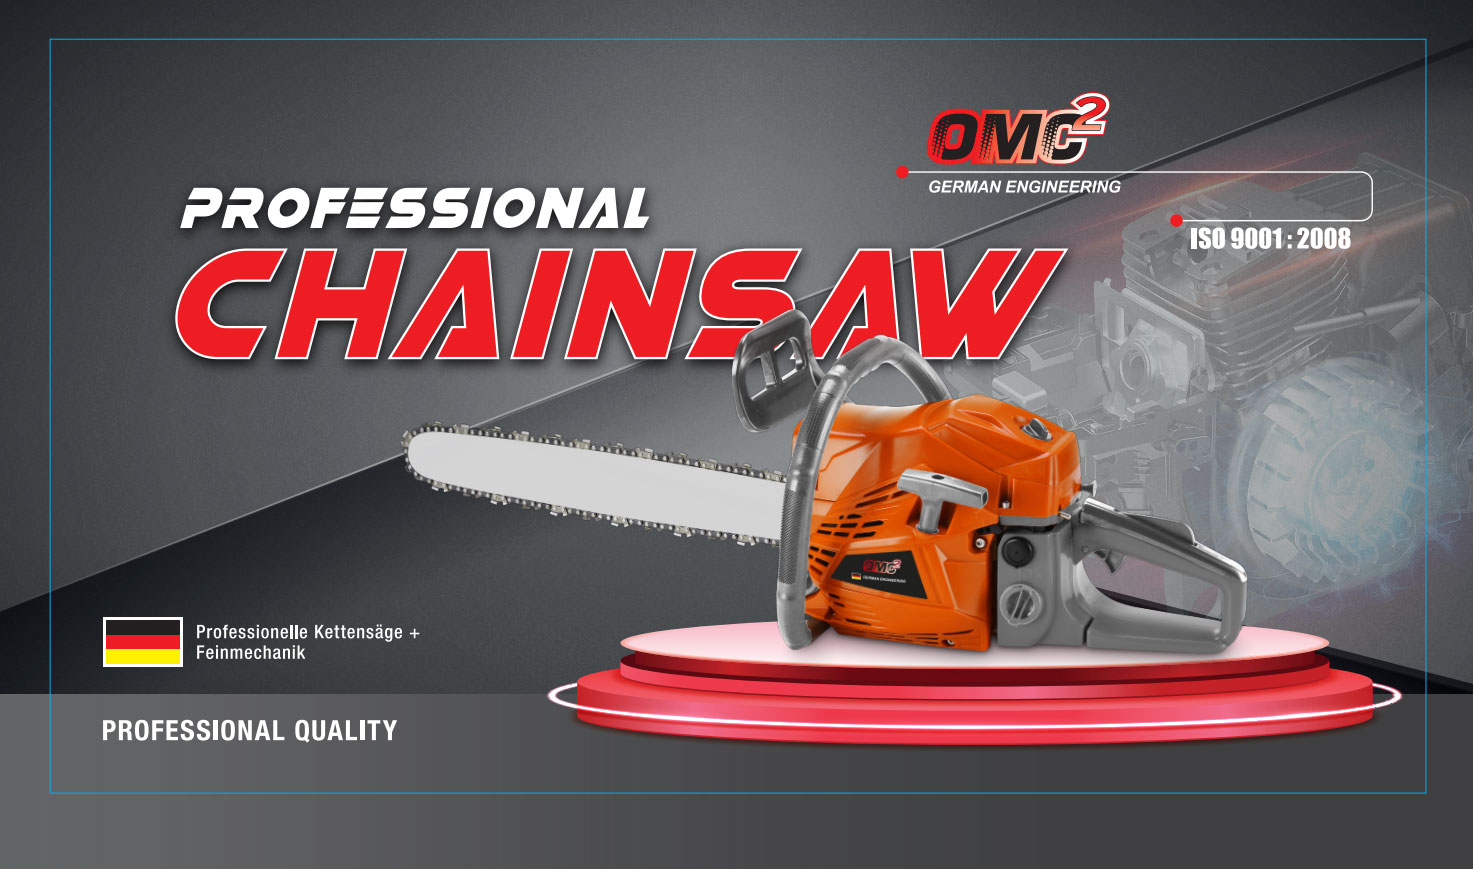 Professional Chainsaw OMC